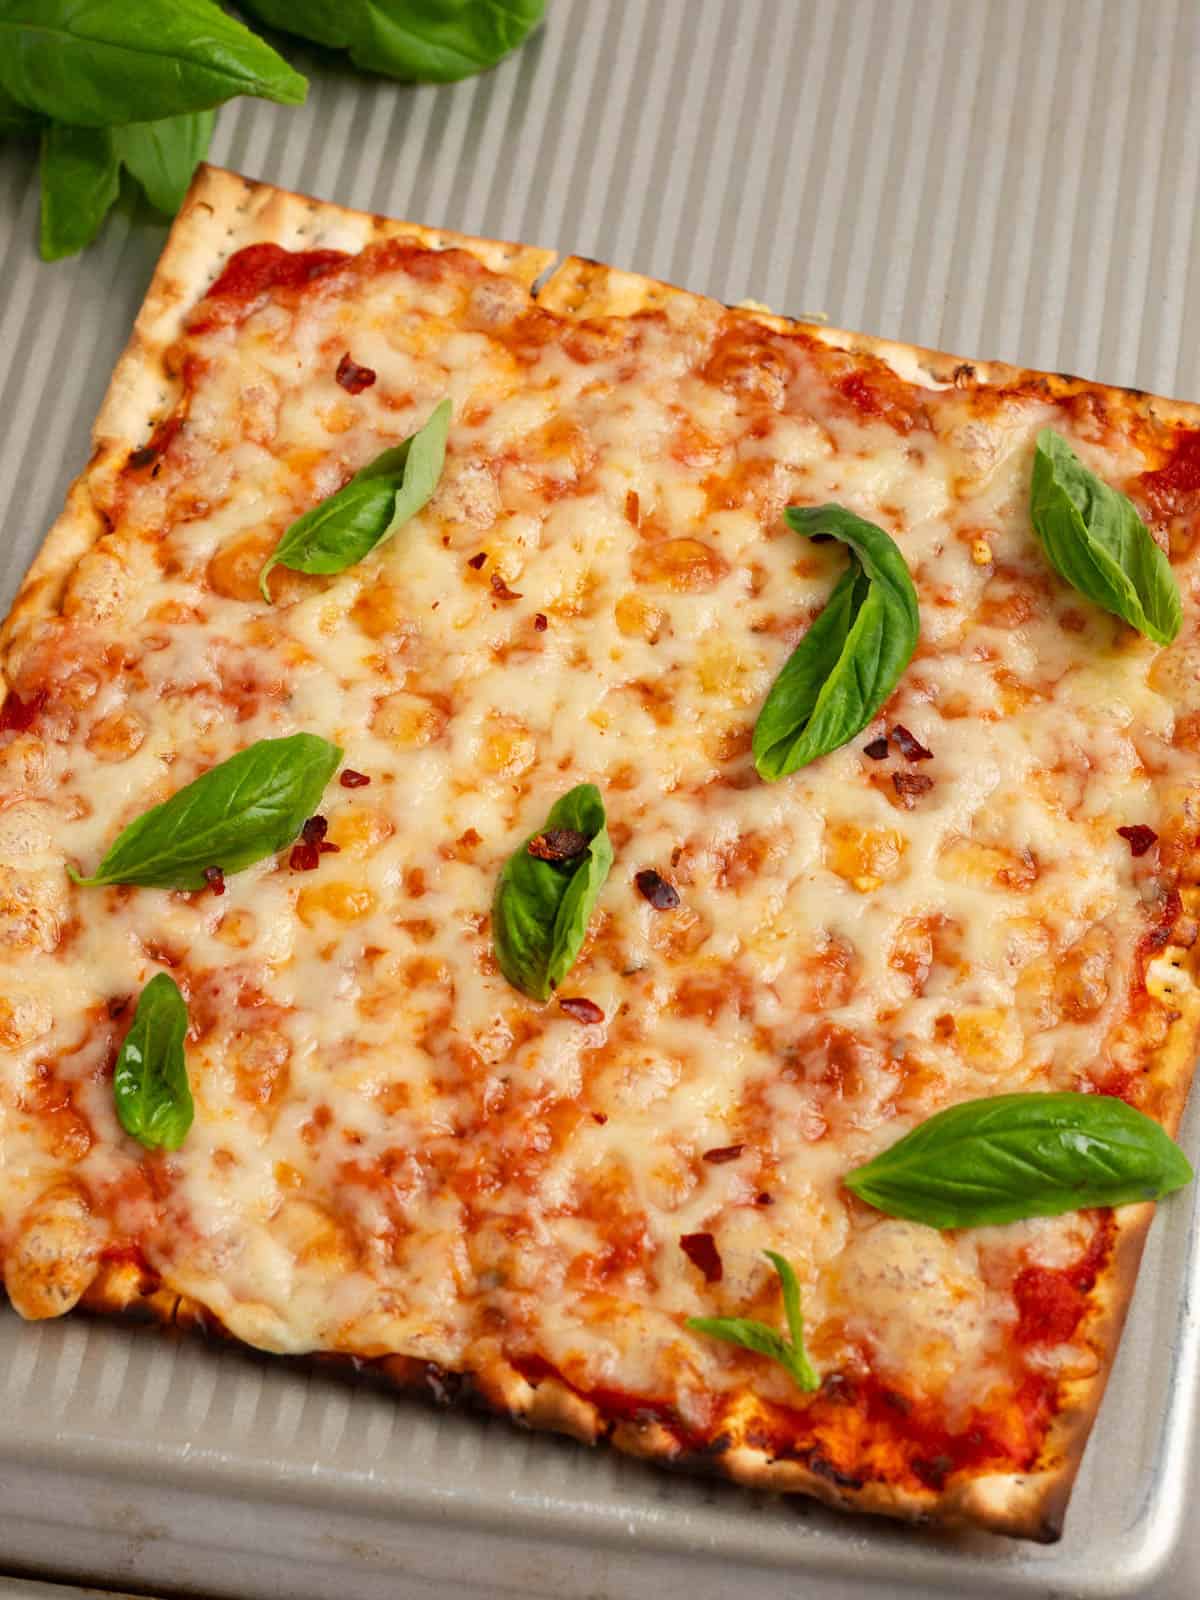 Matzo margherita pizza topped with mozzarella and fresh basil.